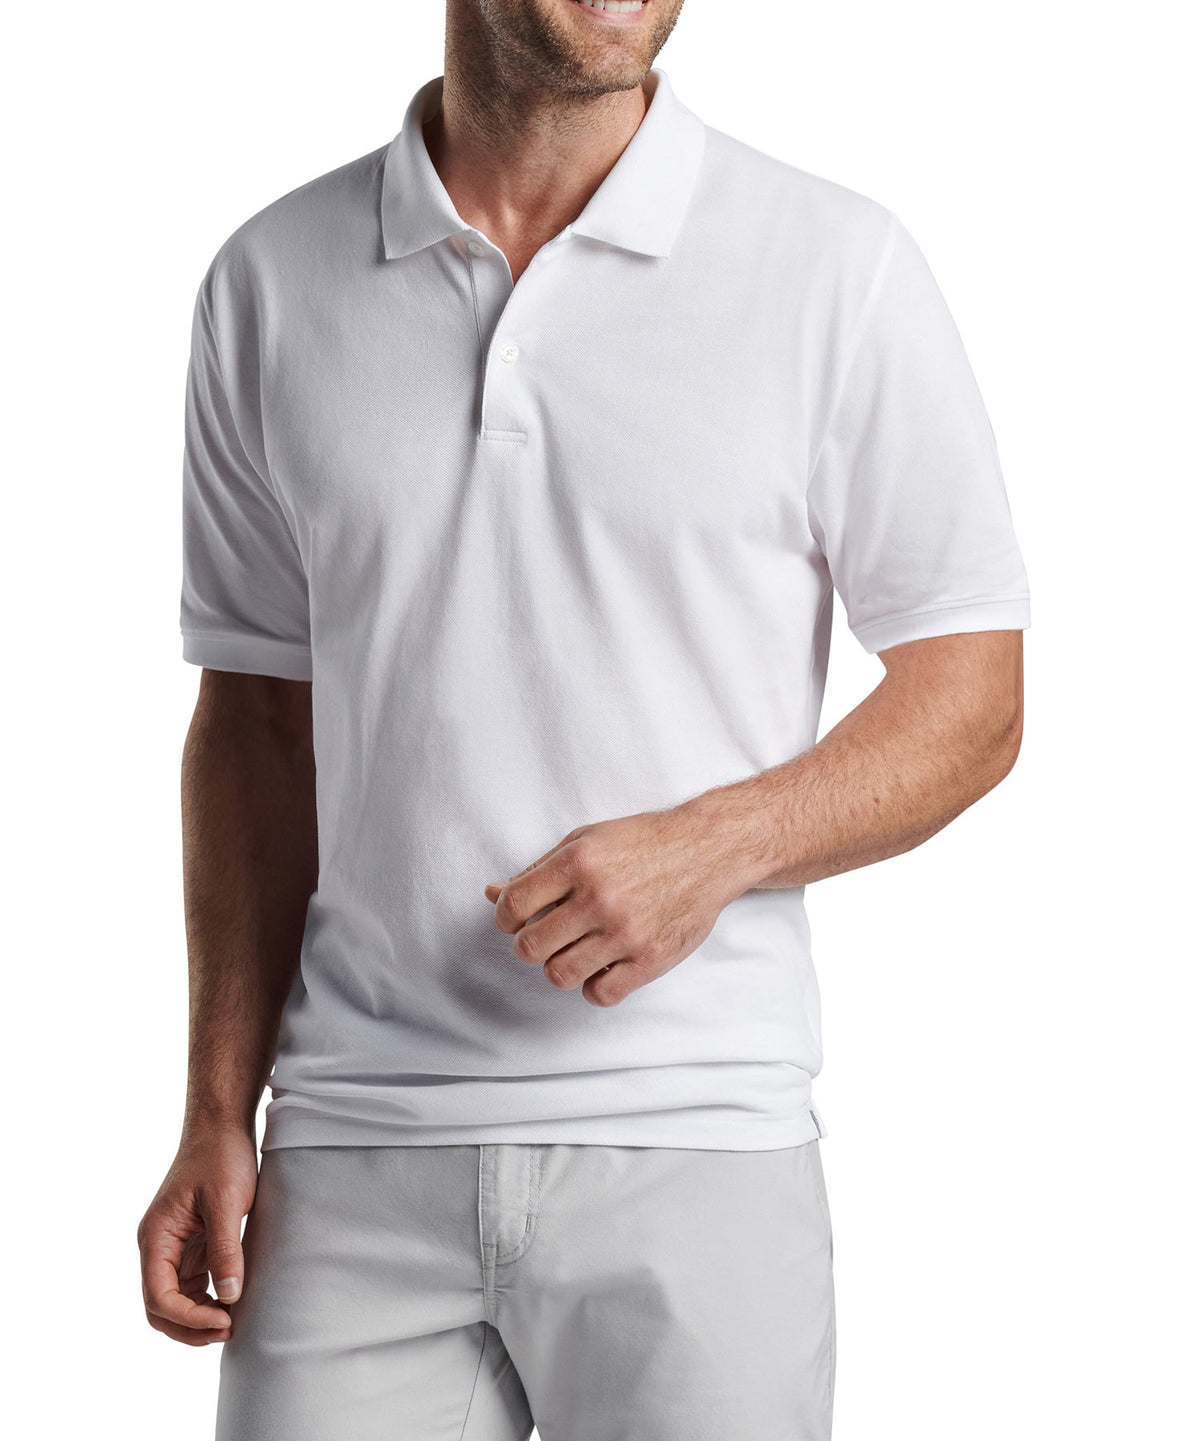 Peter Millar Short Sleeve Sunrise Pique Polo Knit Shirt, Big & Tall